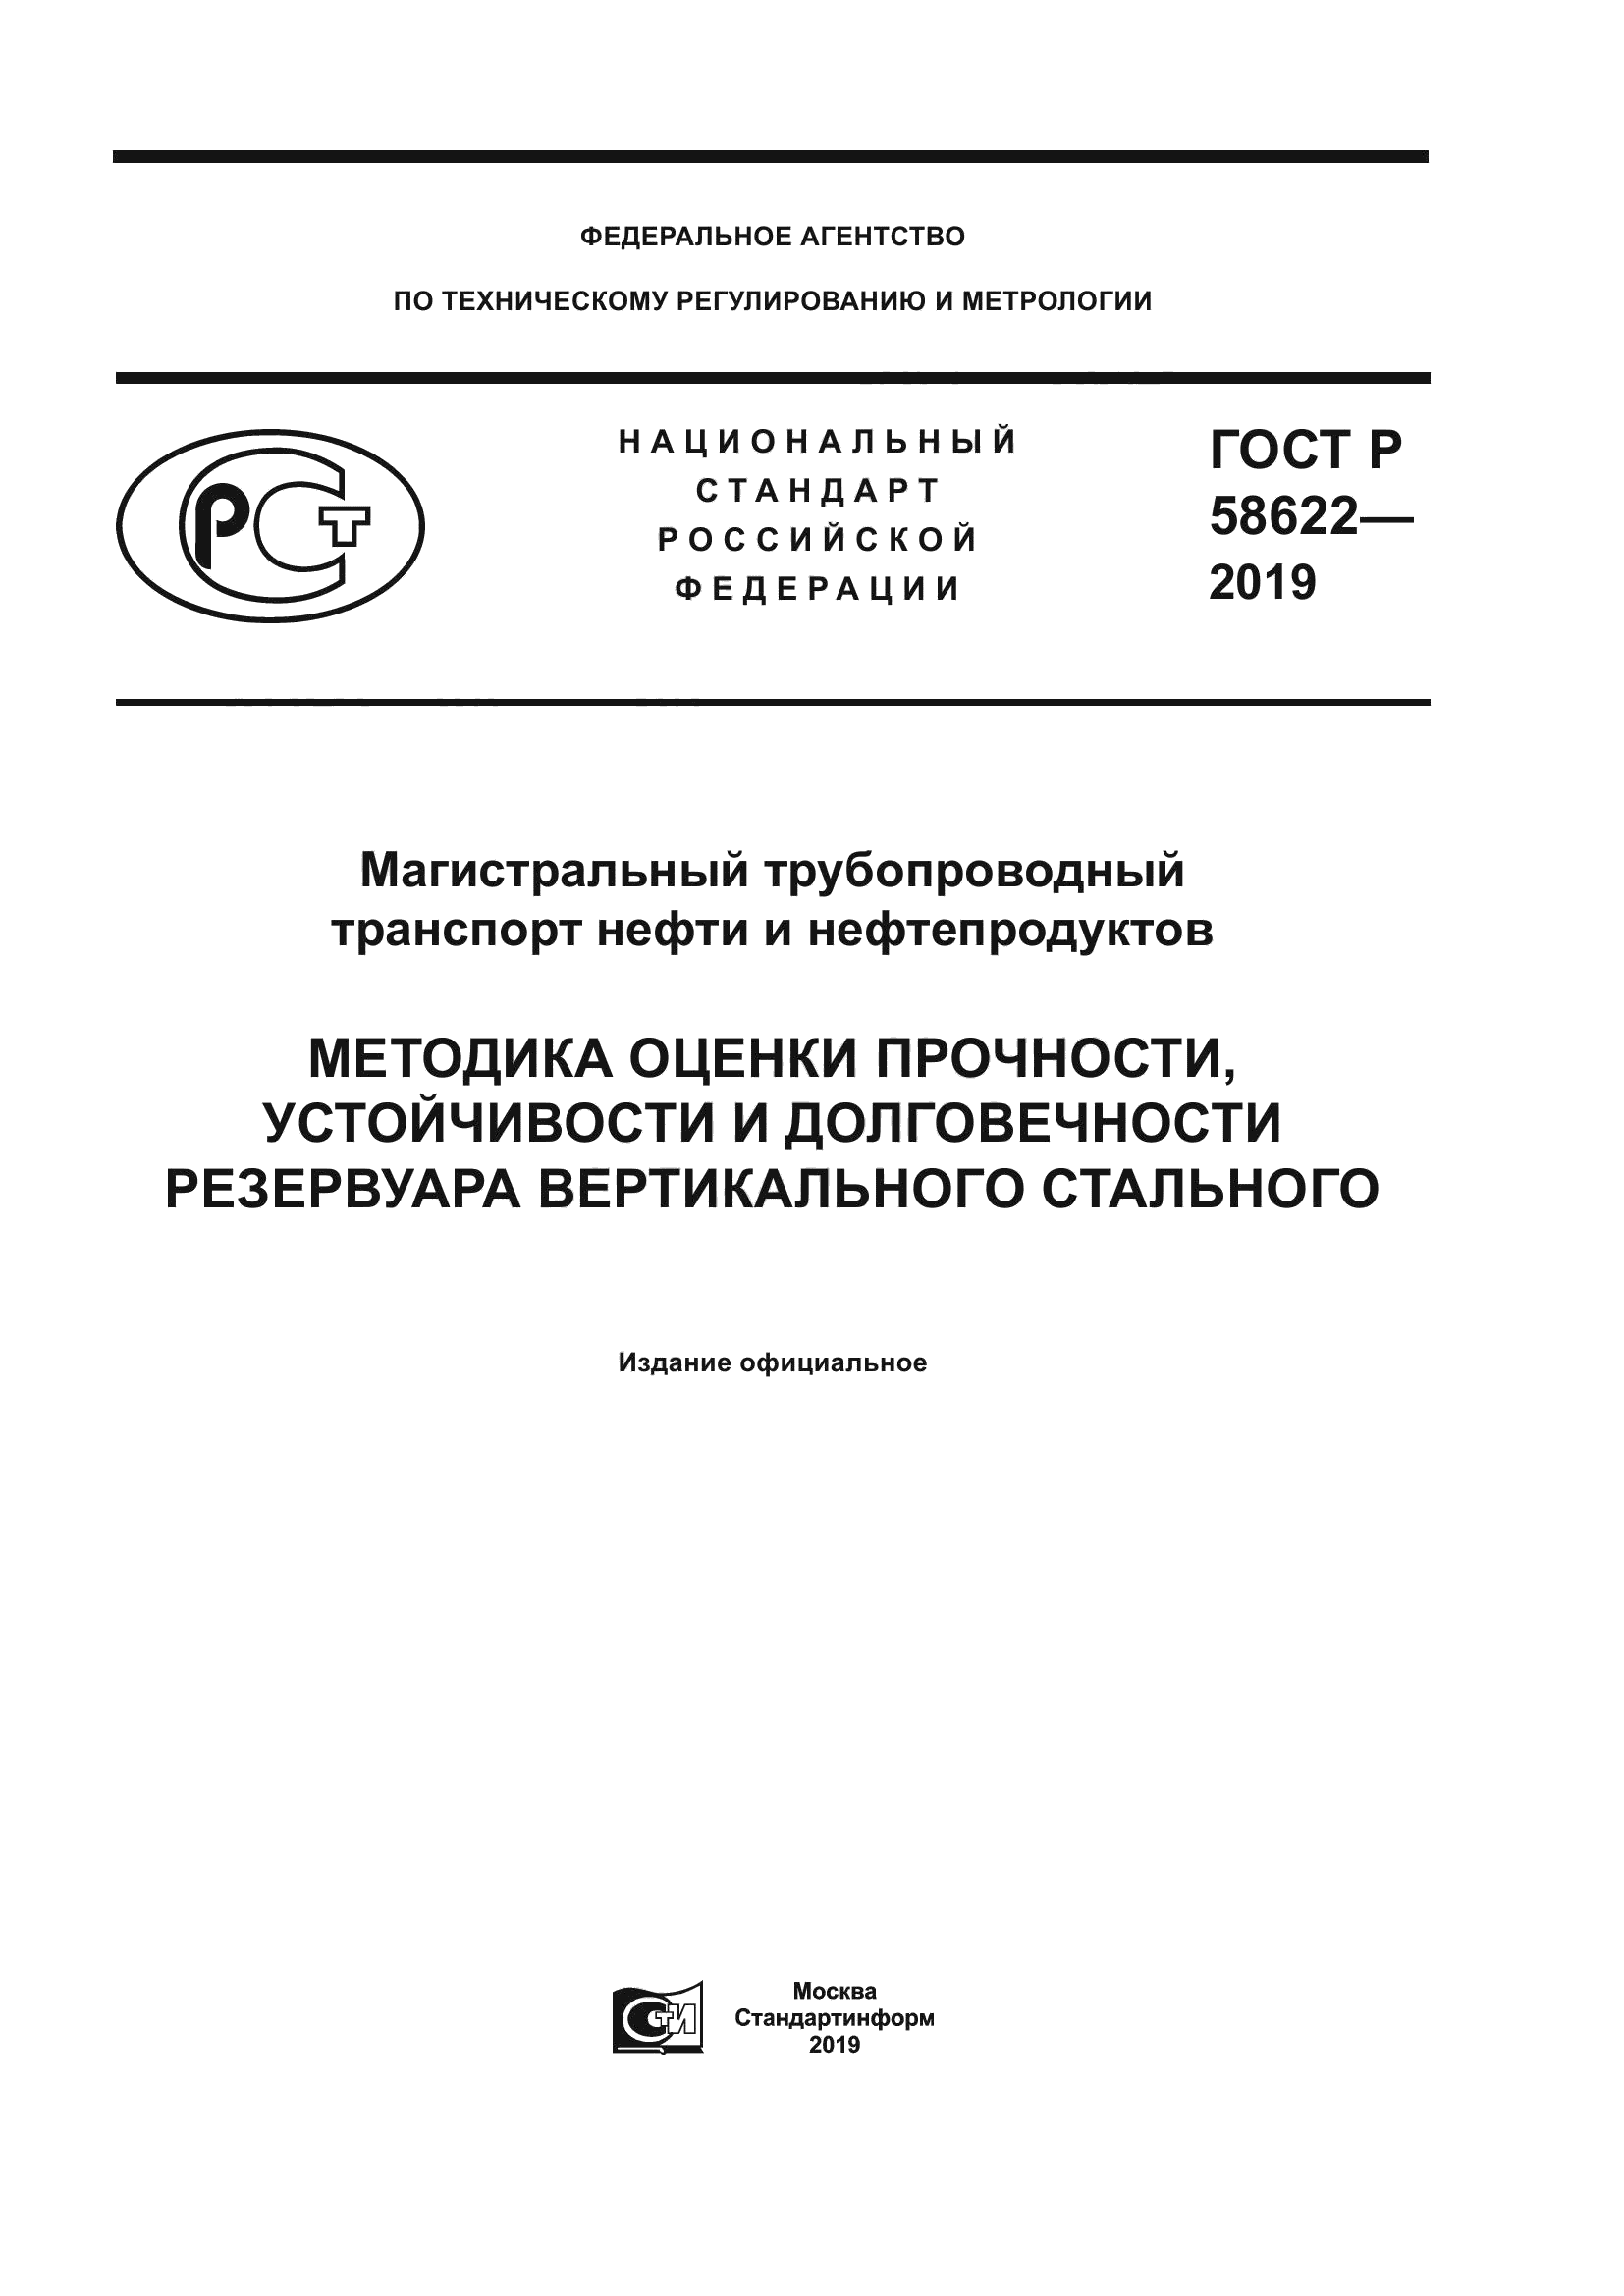 ГОСТ Р 58622-2019